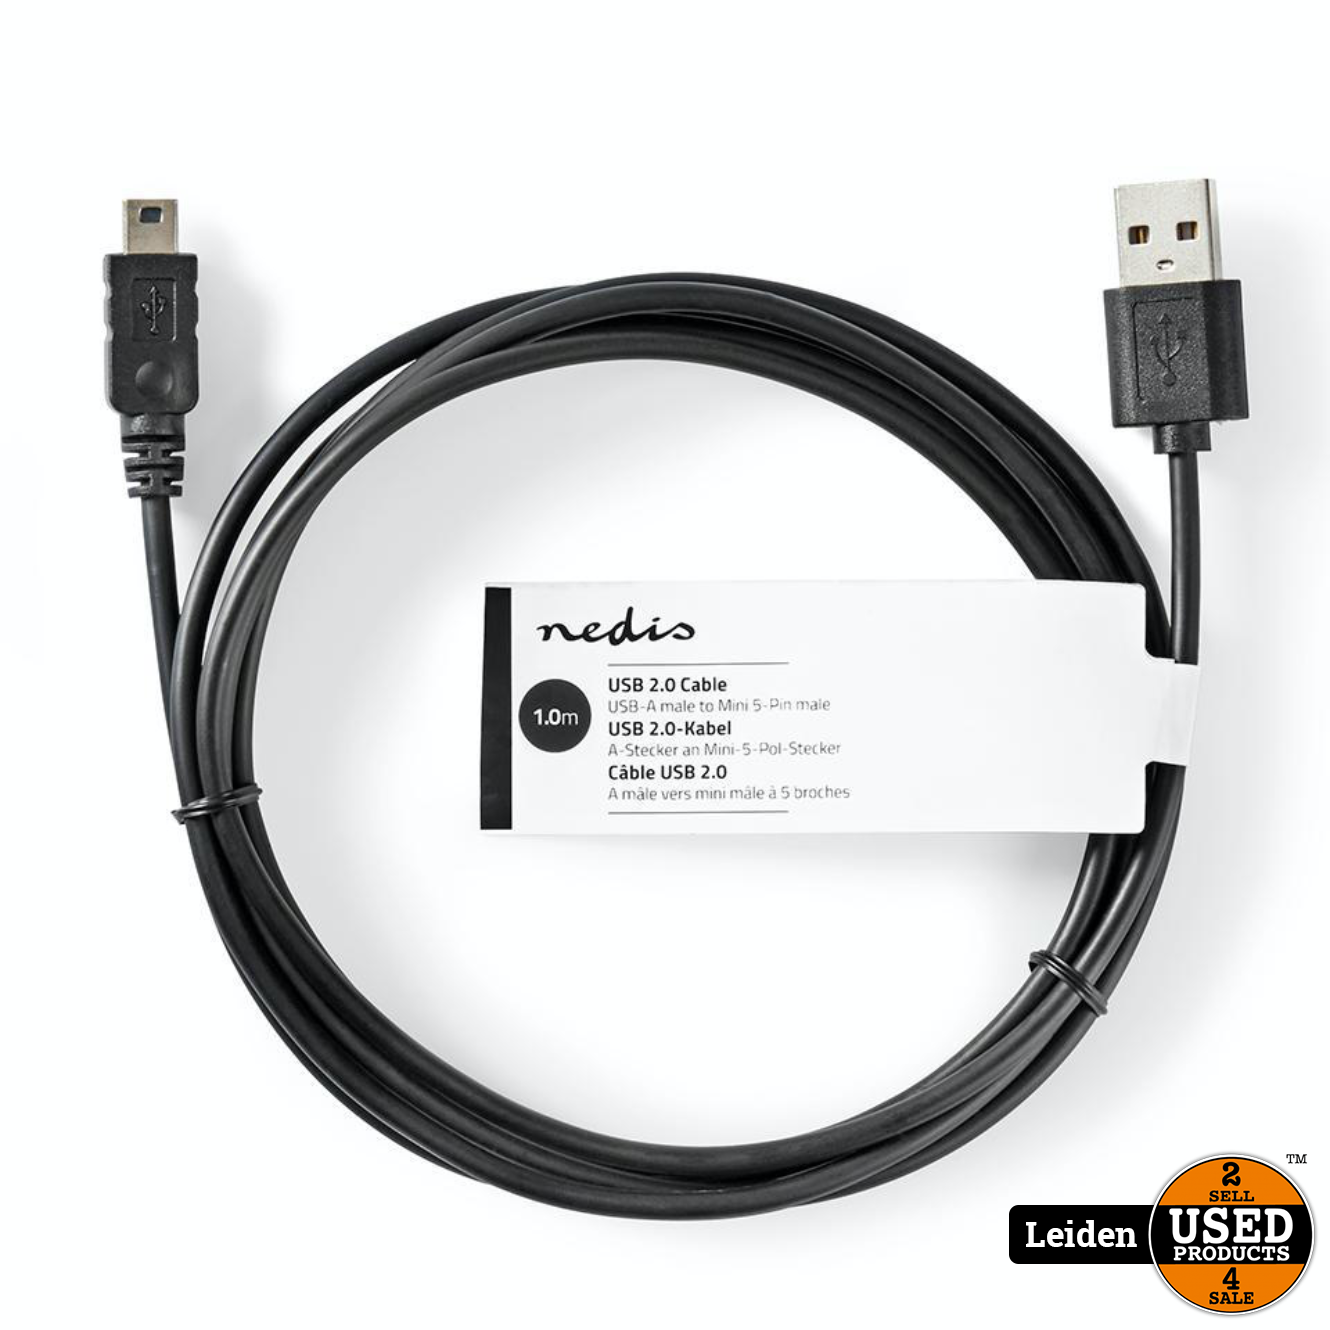 Temerity boom retort Mini USB Kabel 2.0 | 1,0 m | Zwart - Used Products Leiden